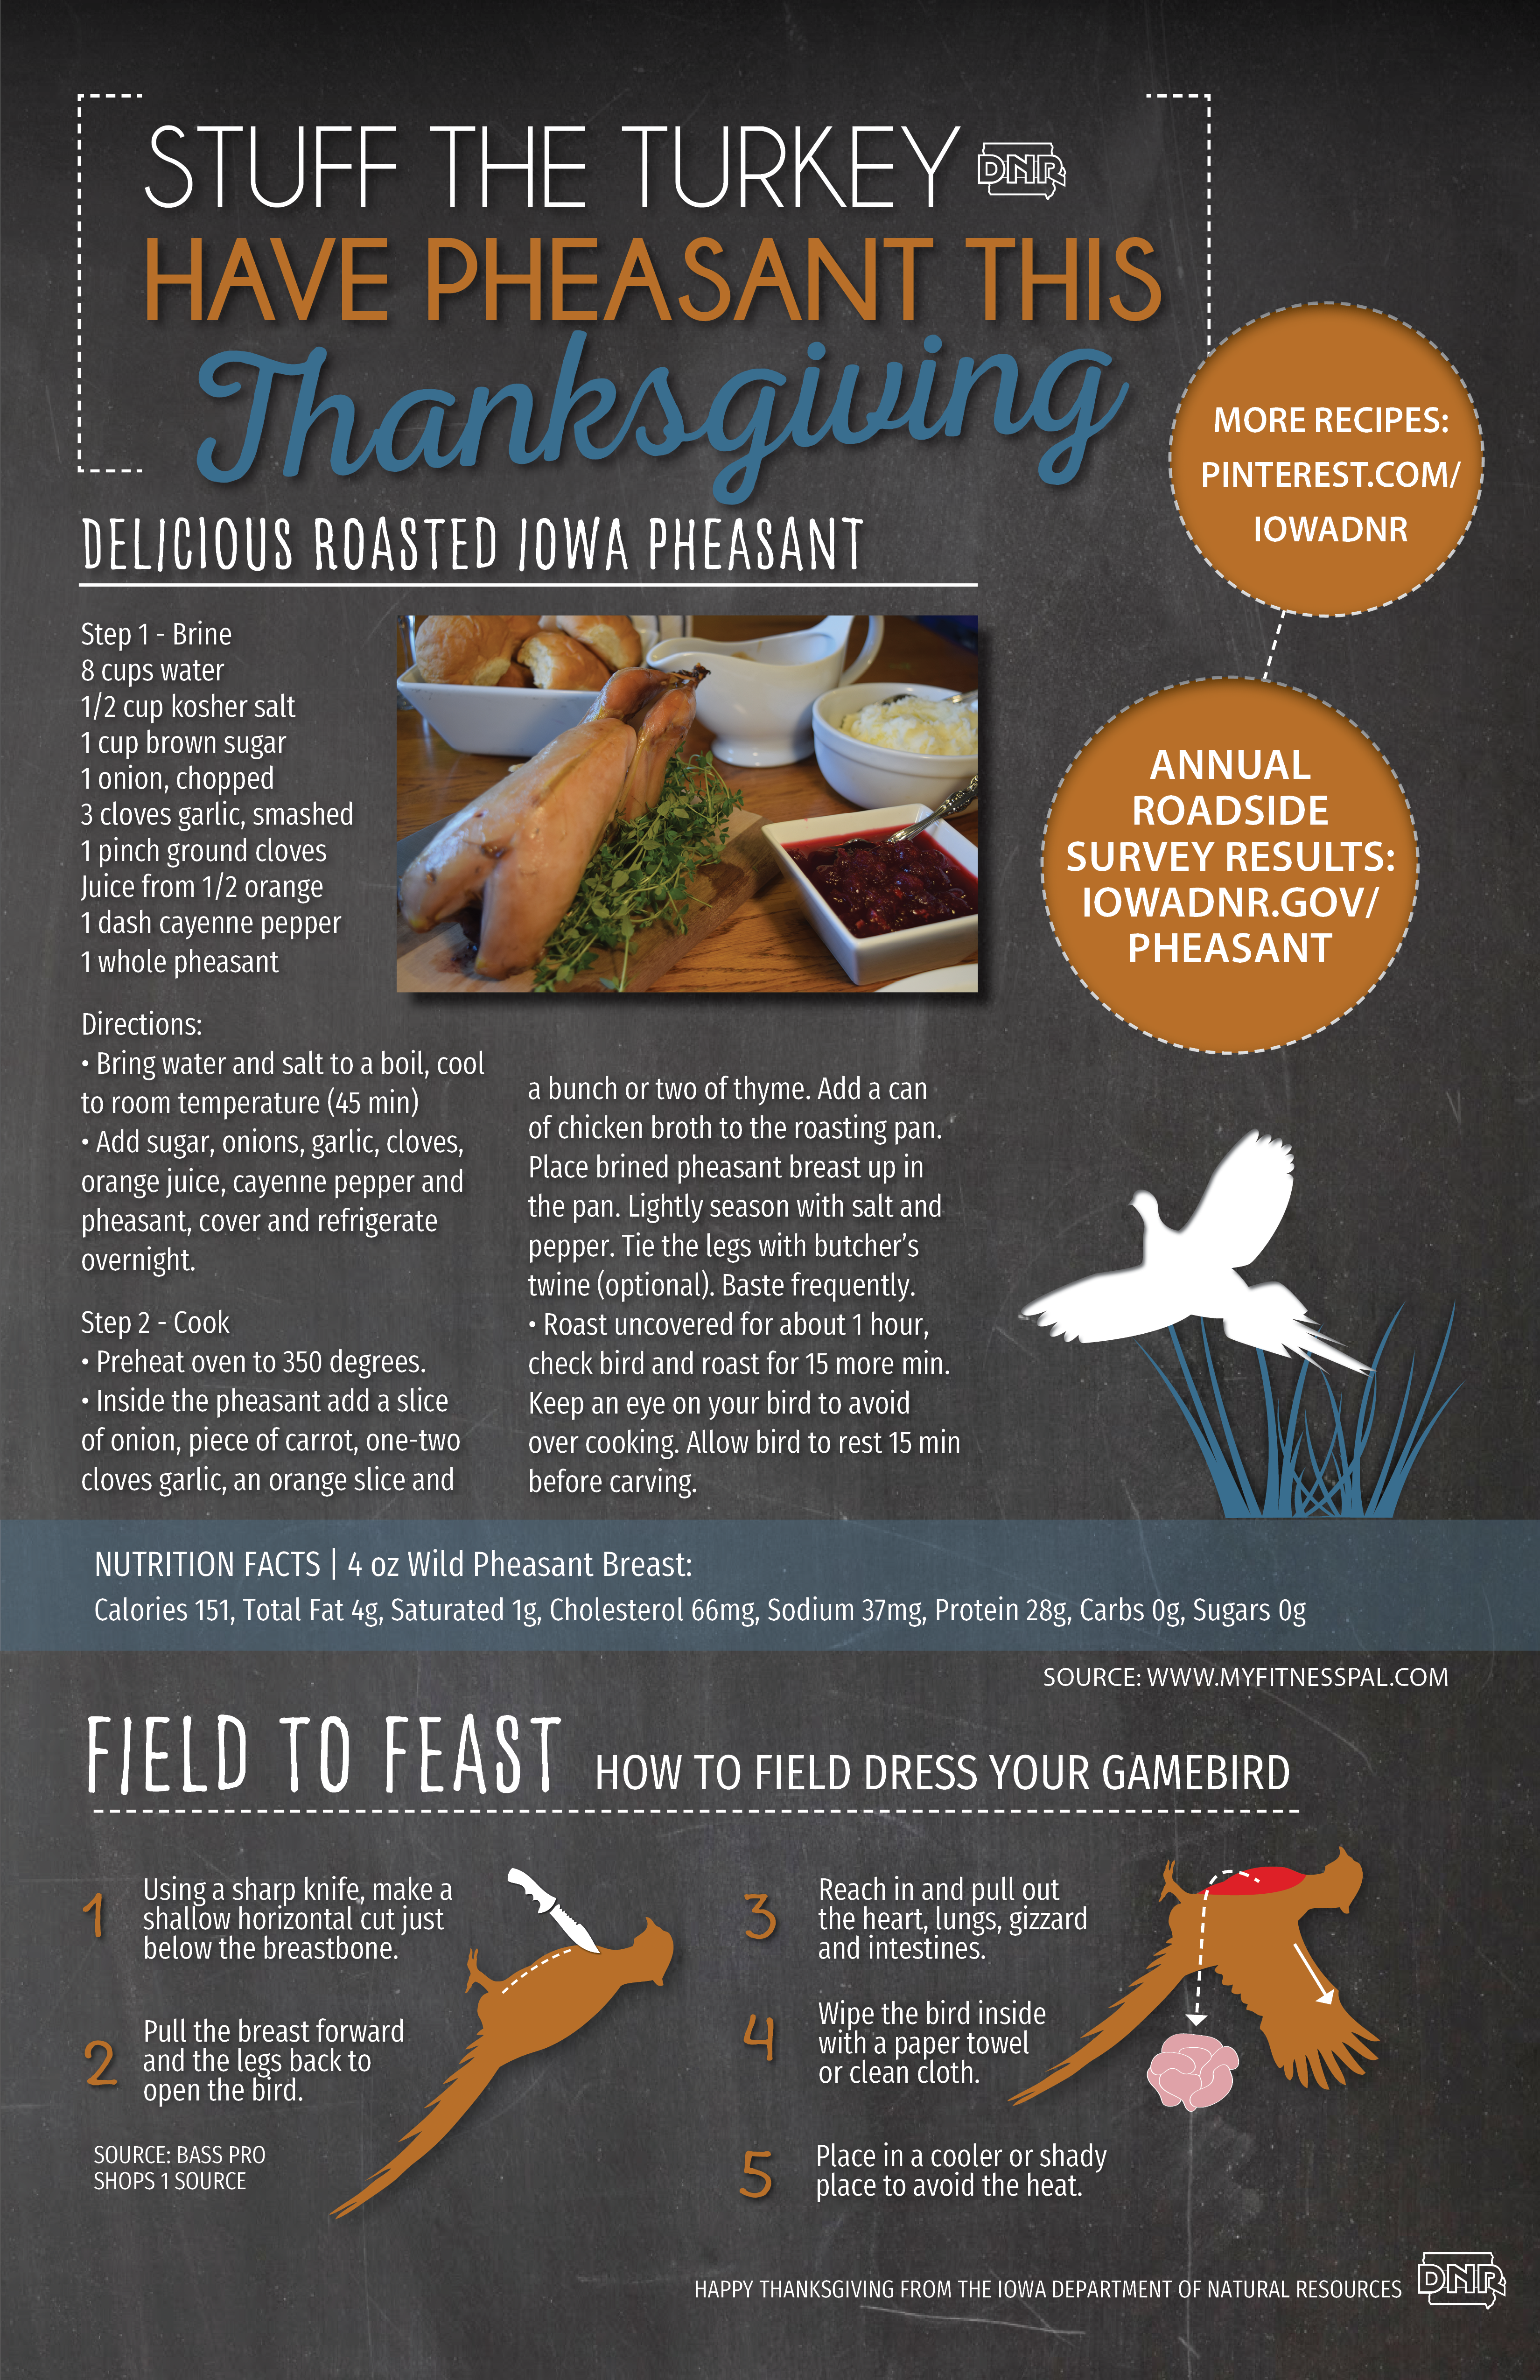 Stuff turkey this Thanksgiving and serve pheasant instead! Delicious Roasted Pheasant recipe | Iowa DNR